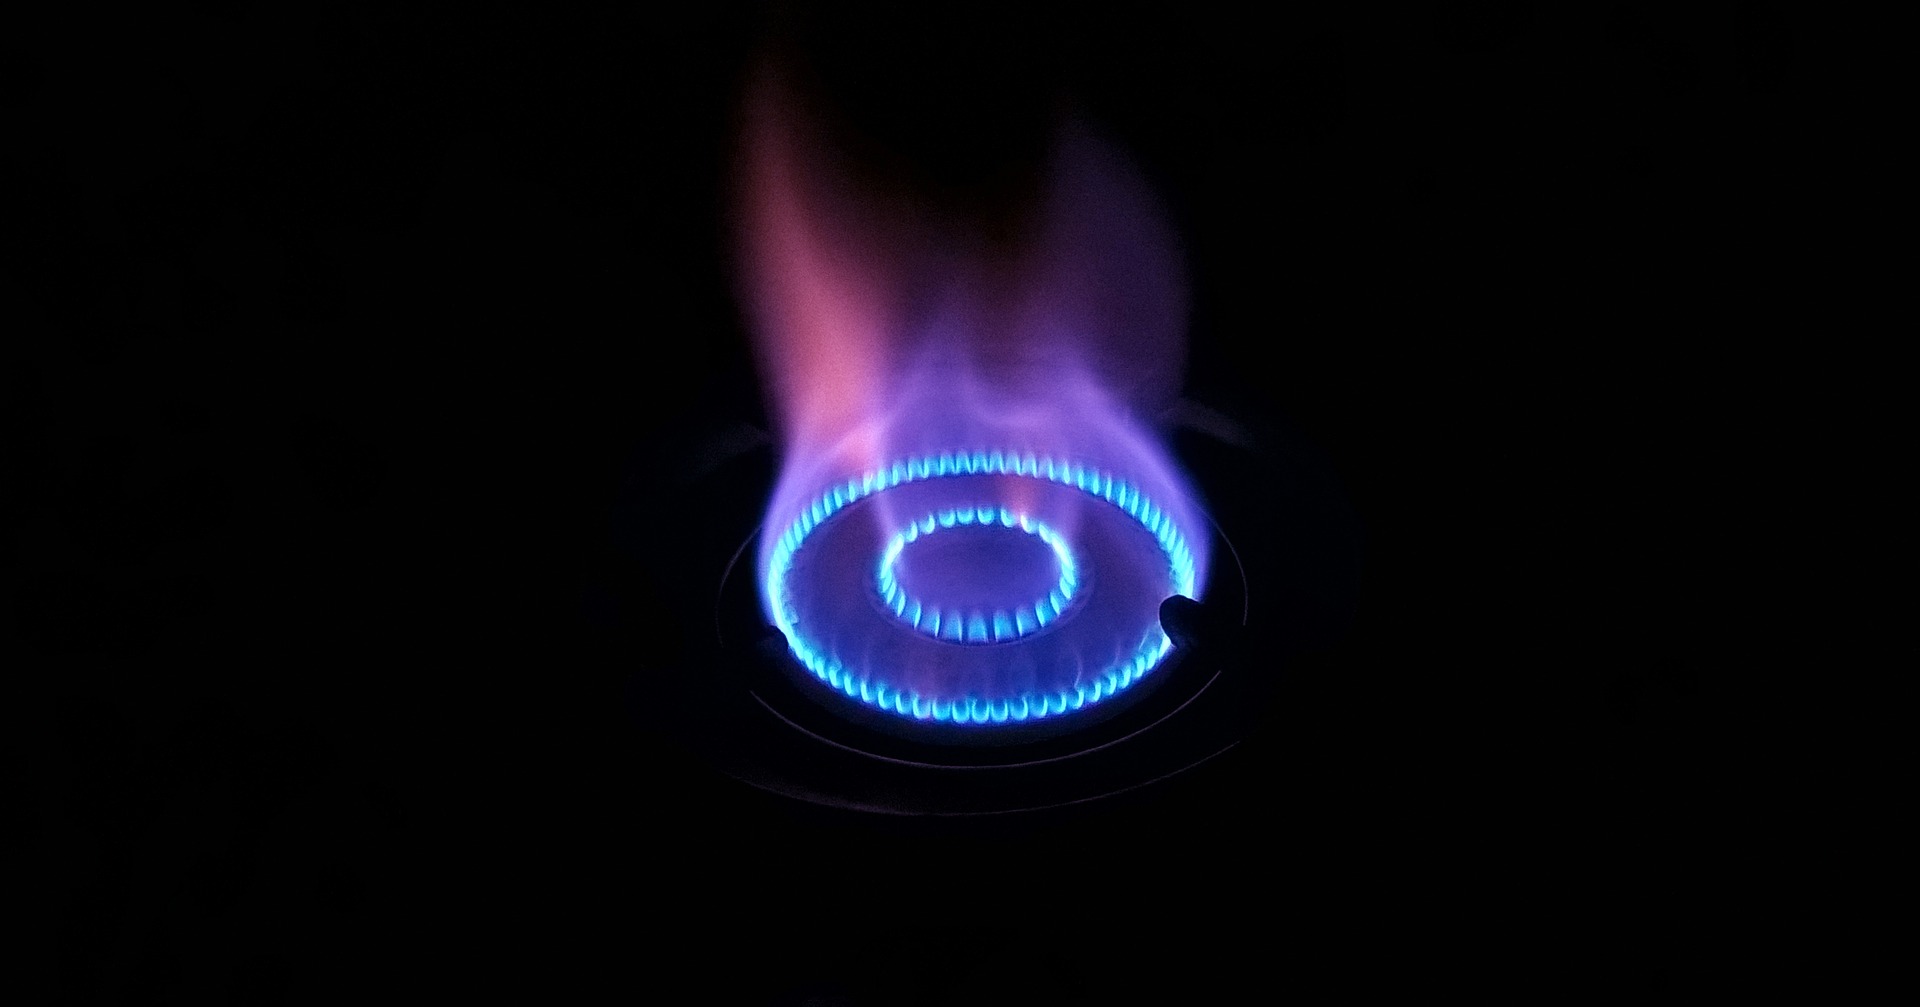 flambee prix energie divise conseil europeen - L'Energeek